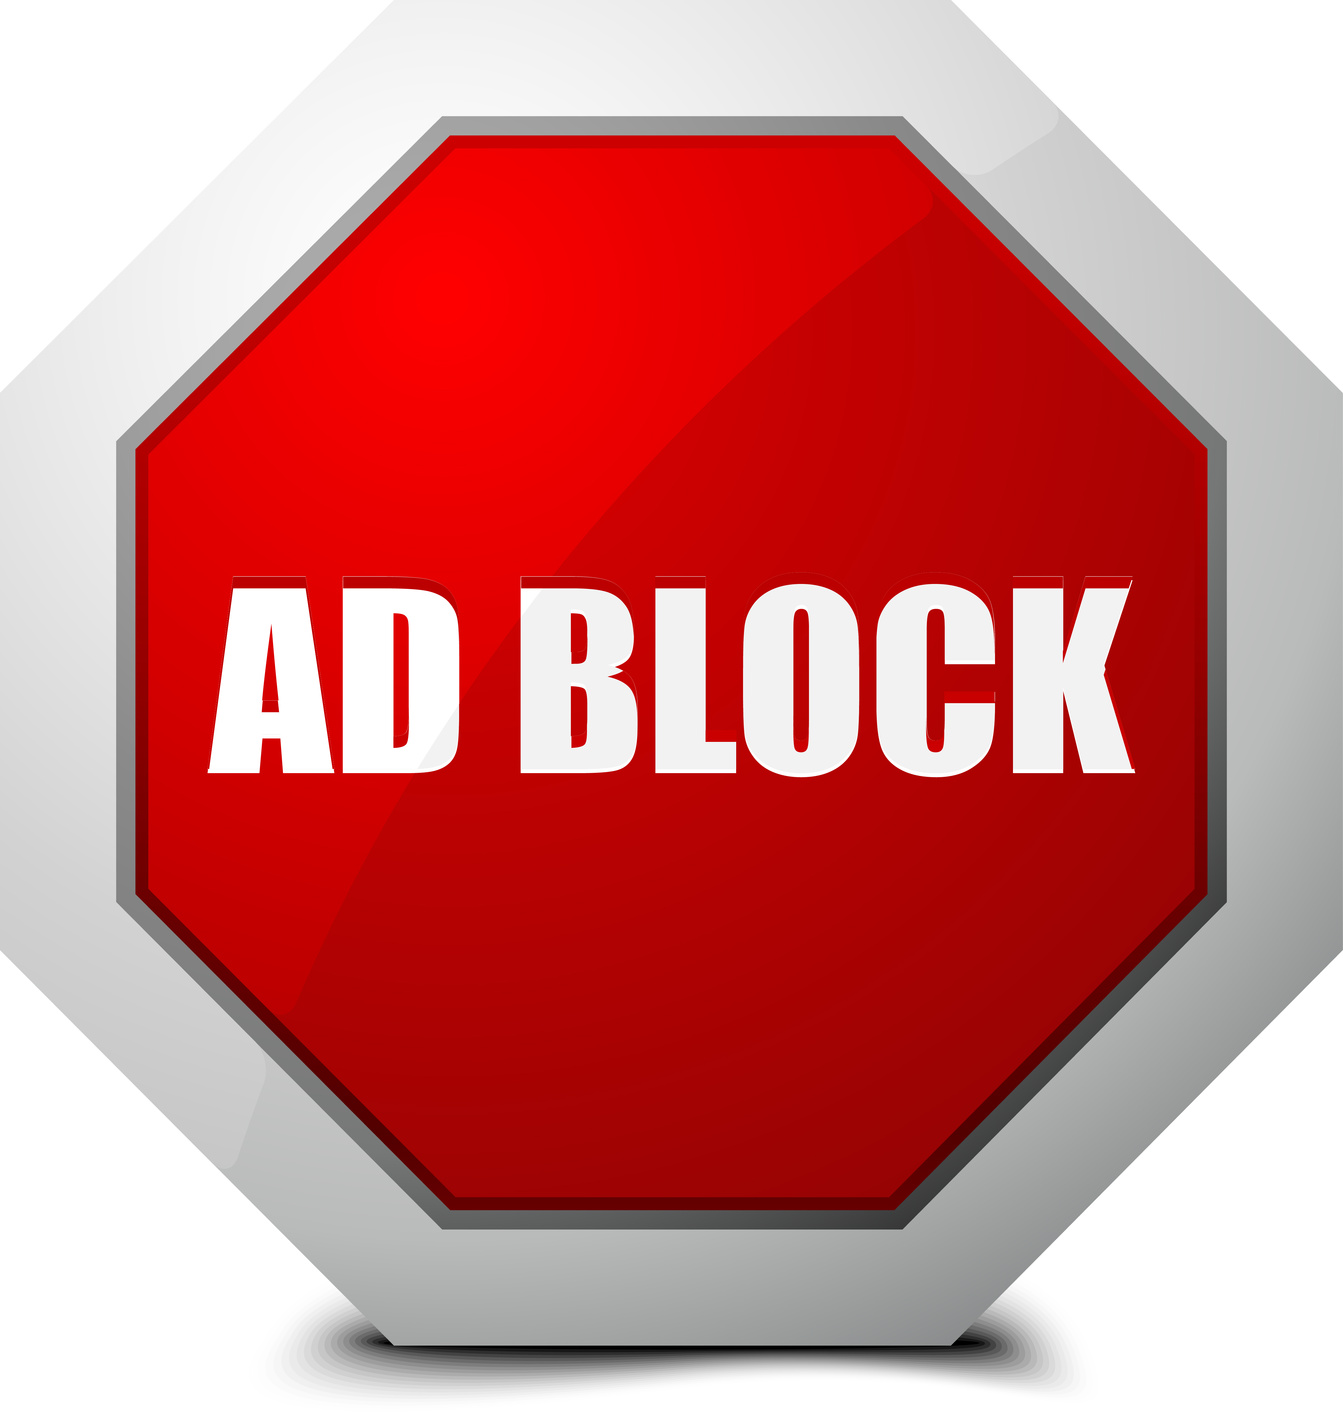 Adblock com. ADBLOCK. Блокировщик рекламы. Логотип ADBLOCK. Значок блокировки рекламы.